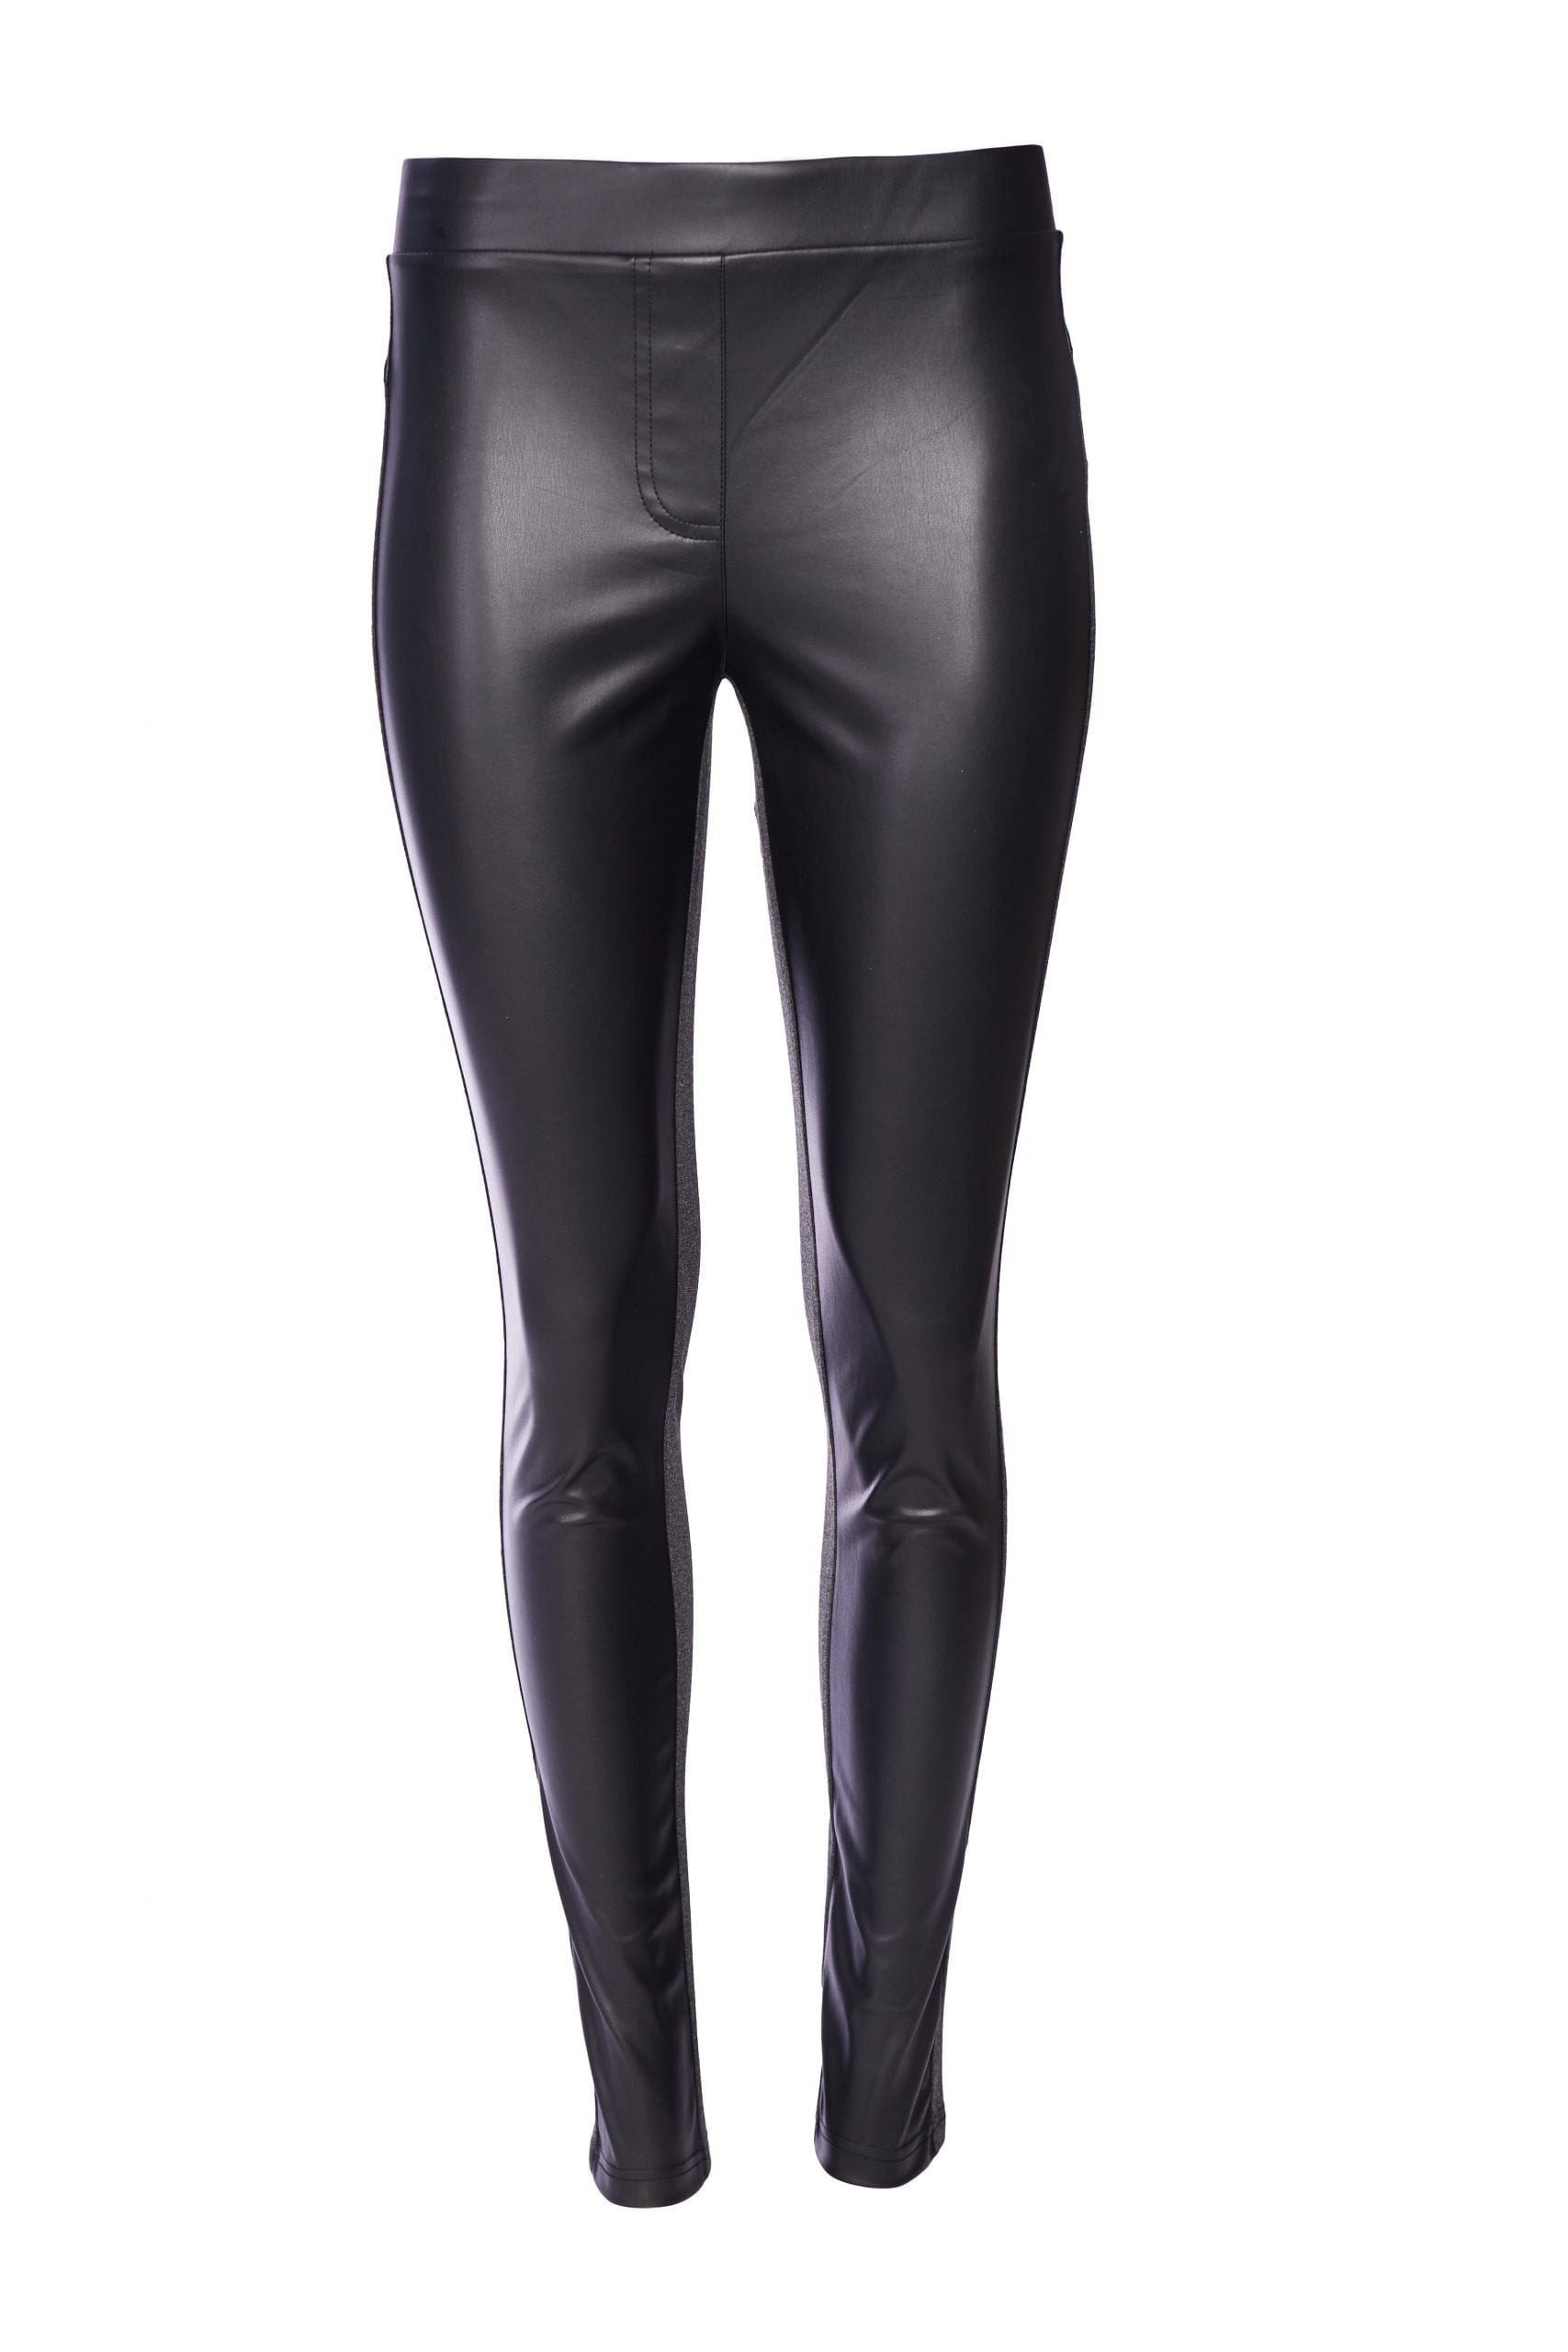 NEW PINK Victoria's Secret Faux Leather Panel Leggings Black - Size XS |  eBay